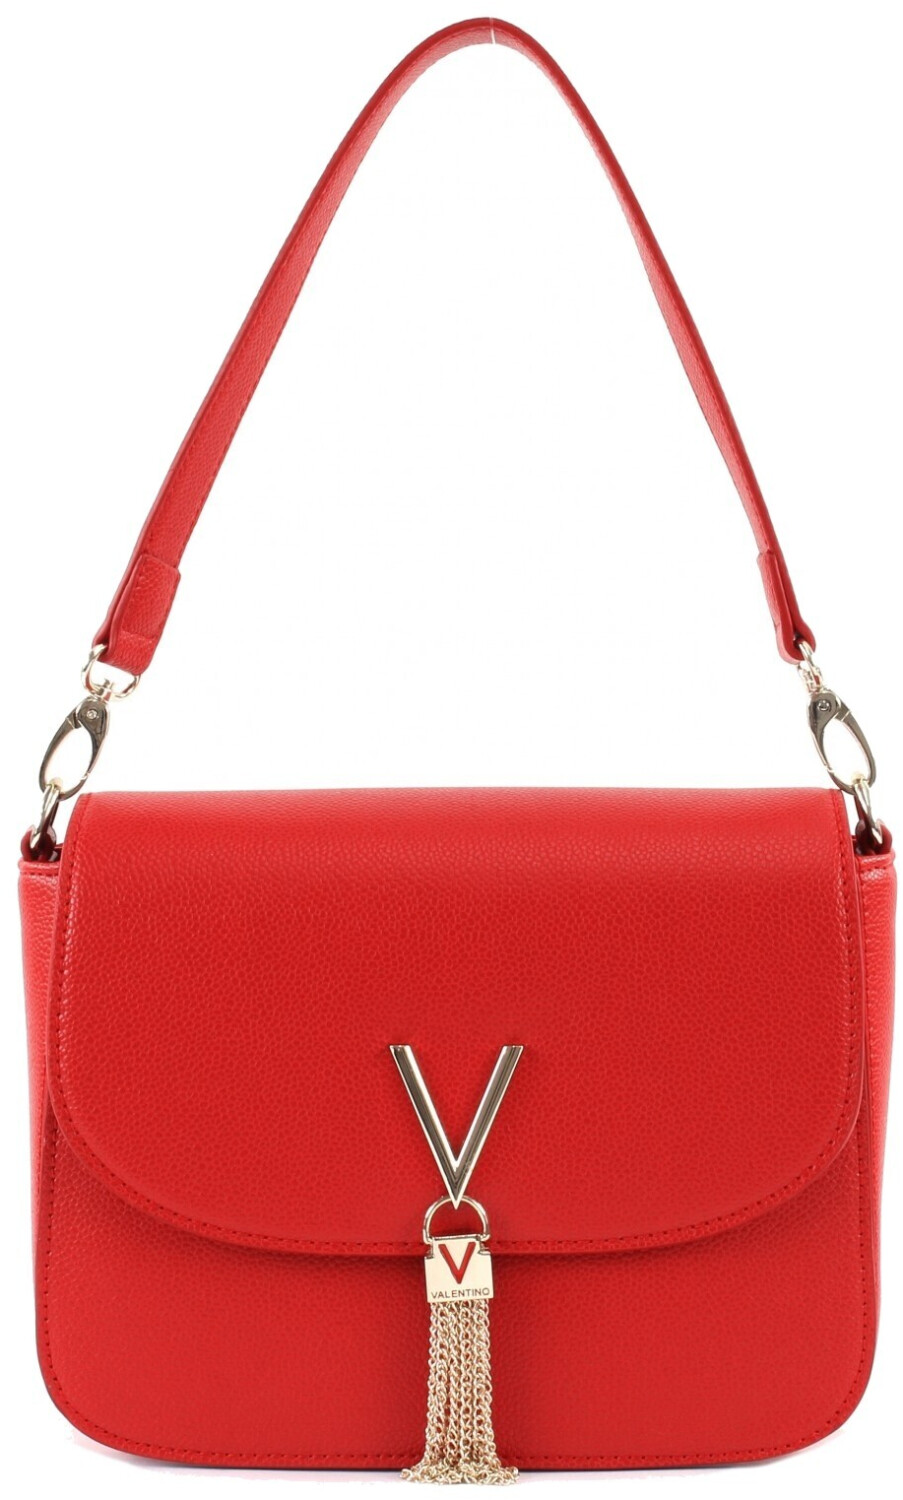 Divina shoulder bag, Valentino bags